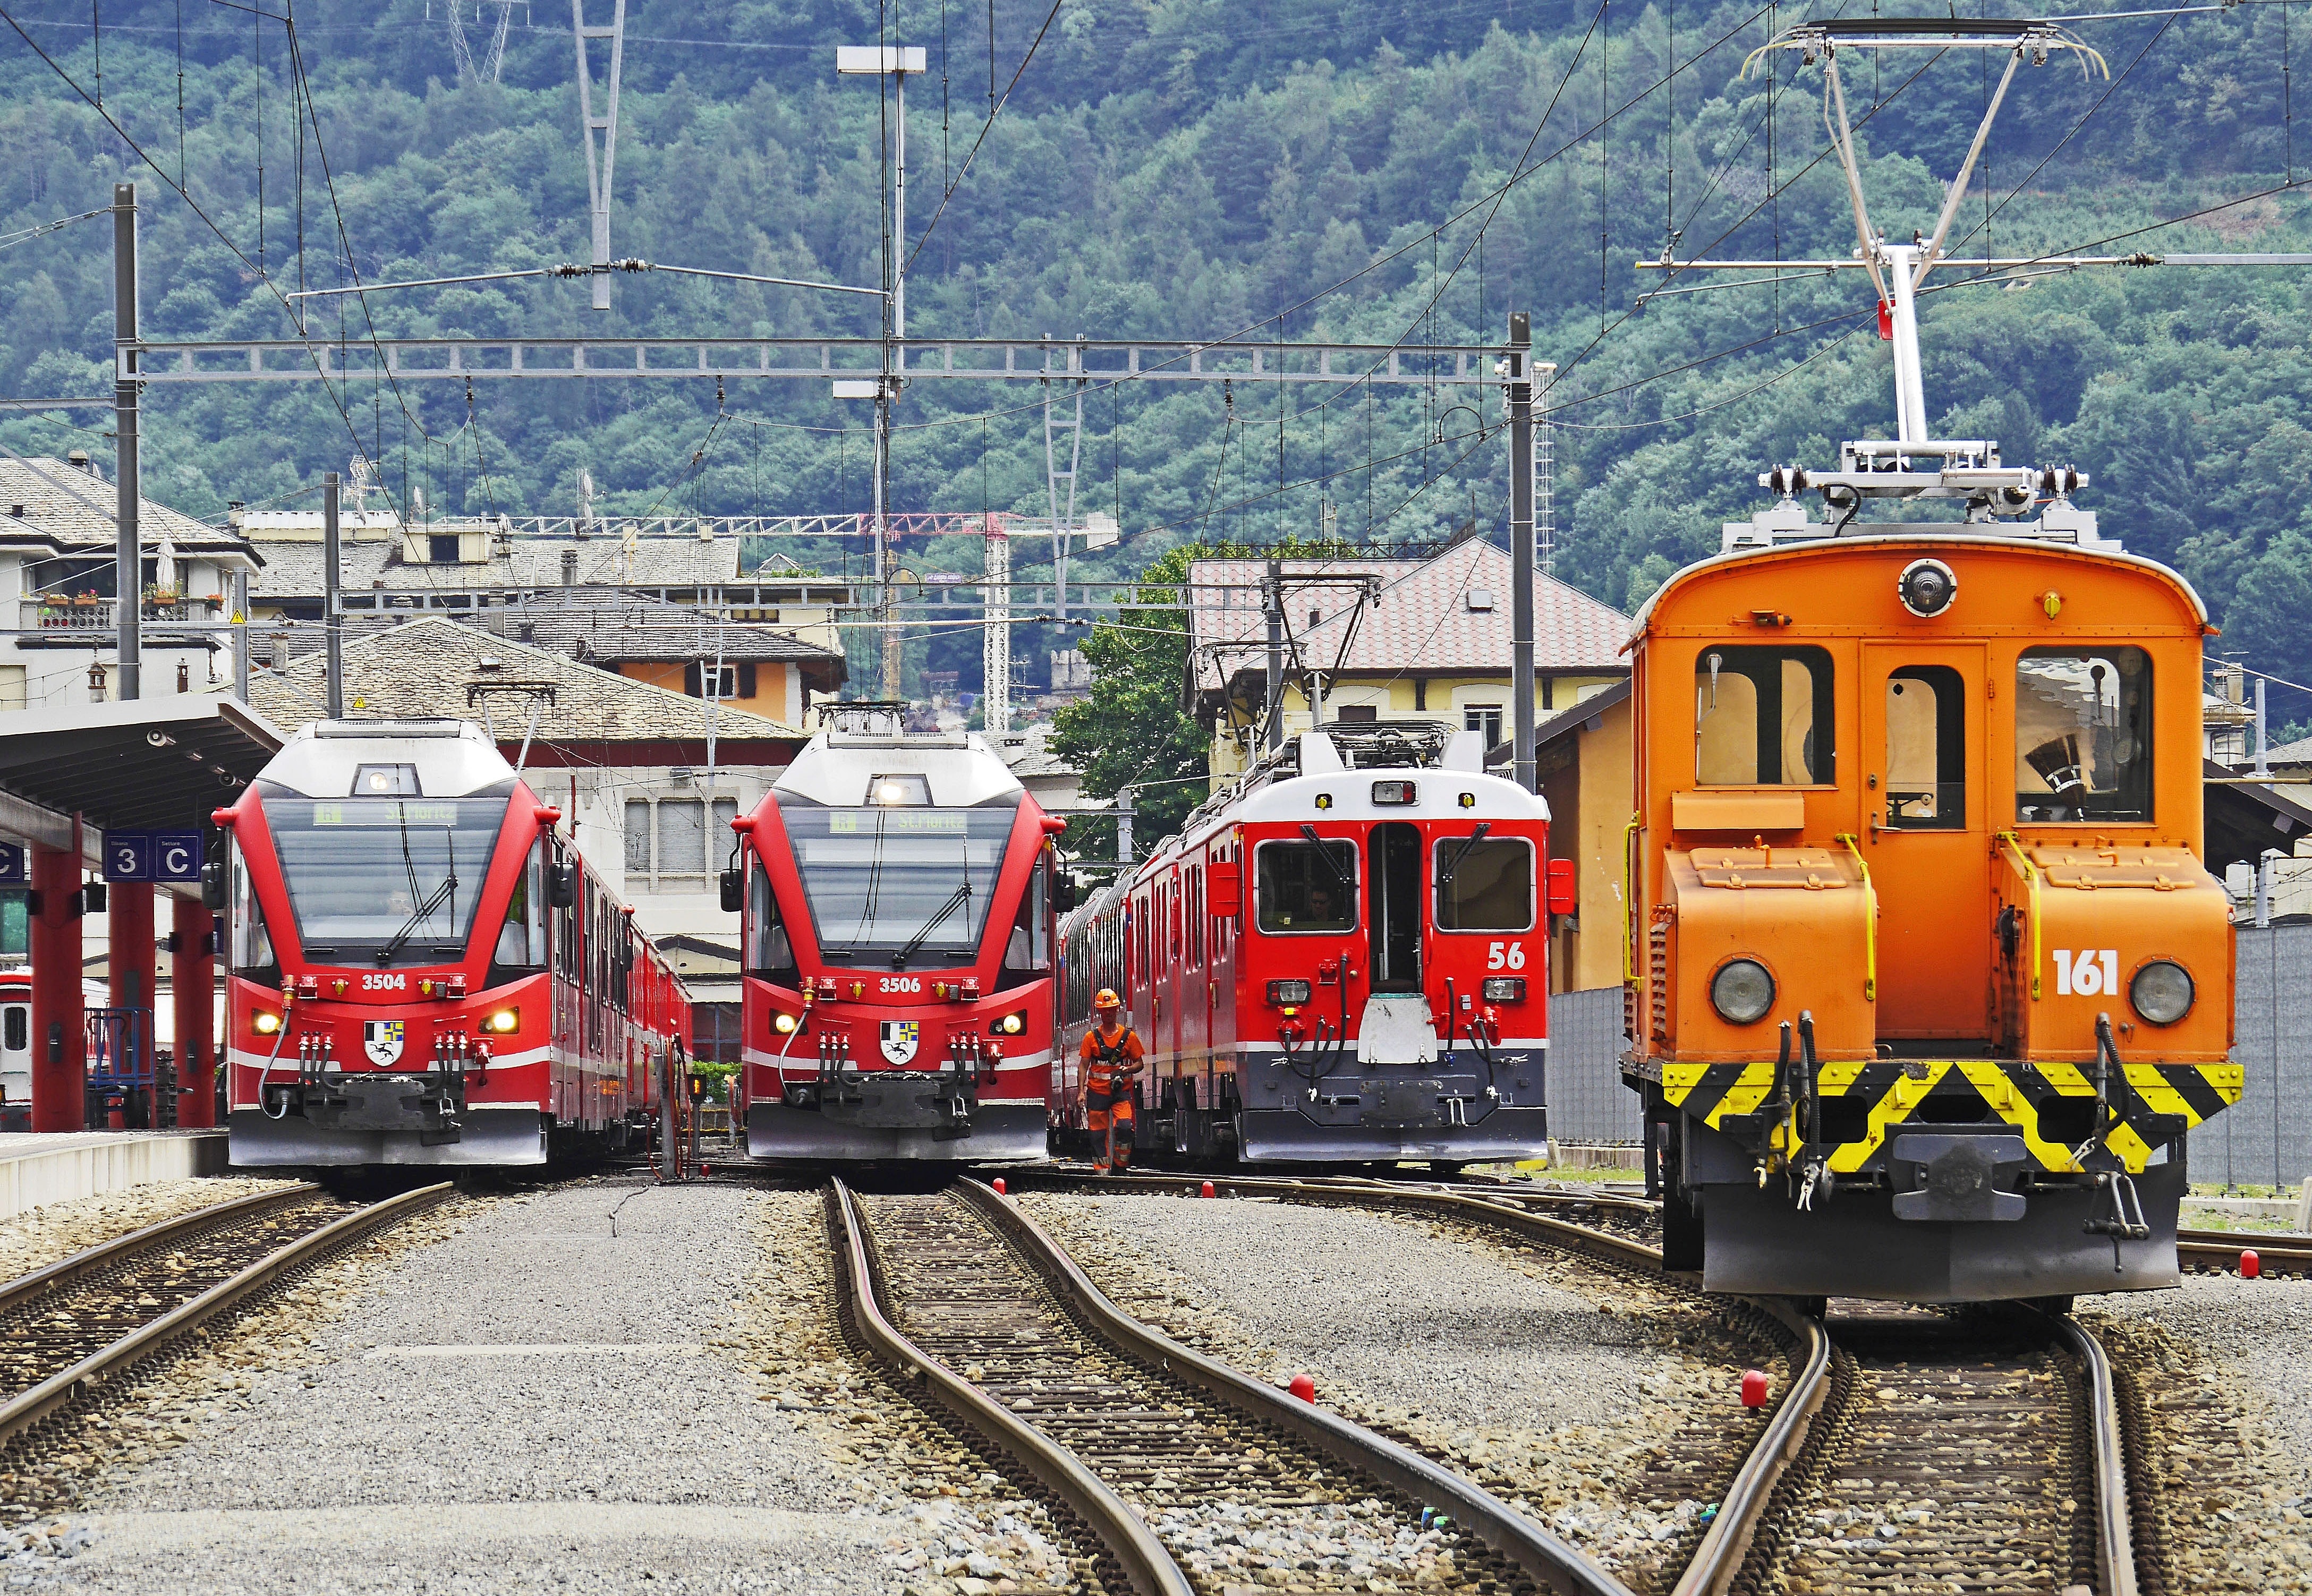 4 trains